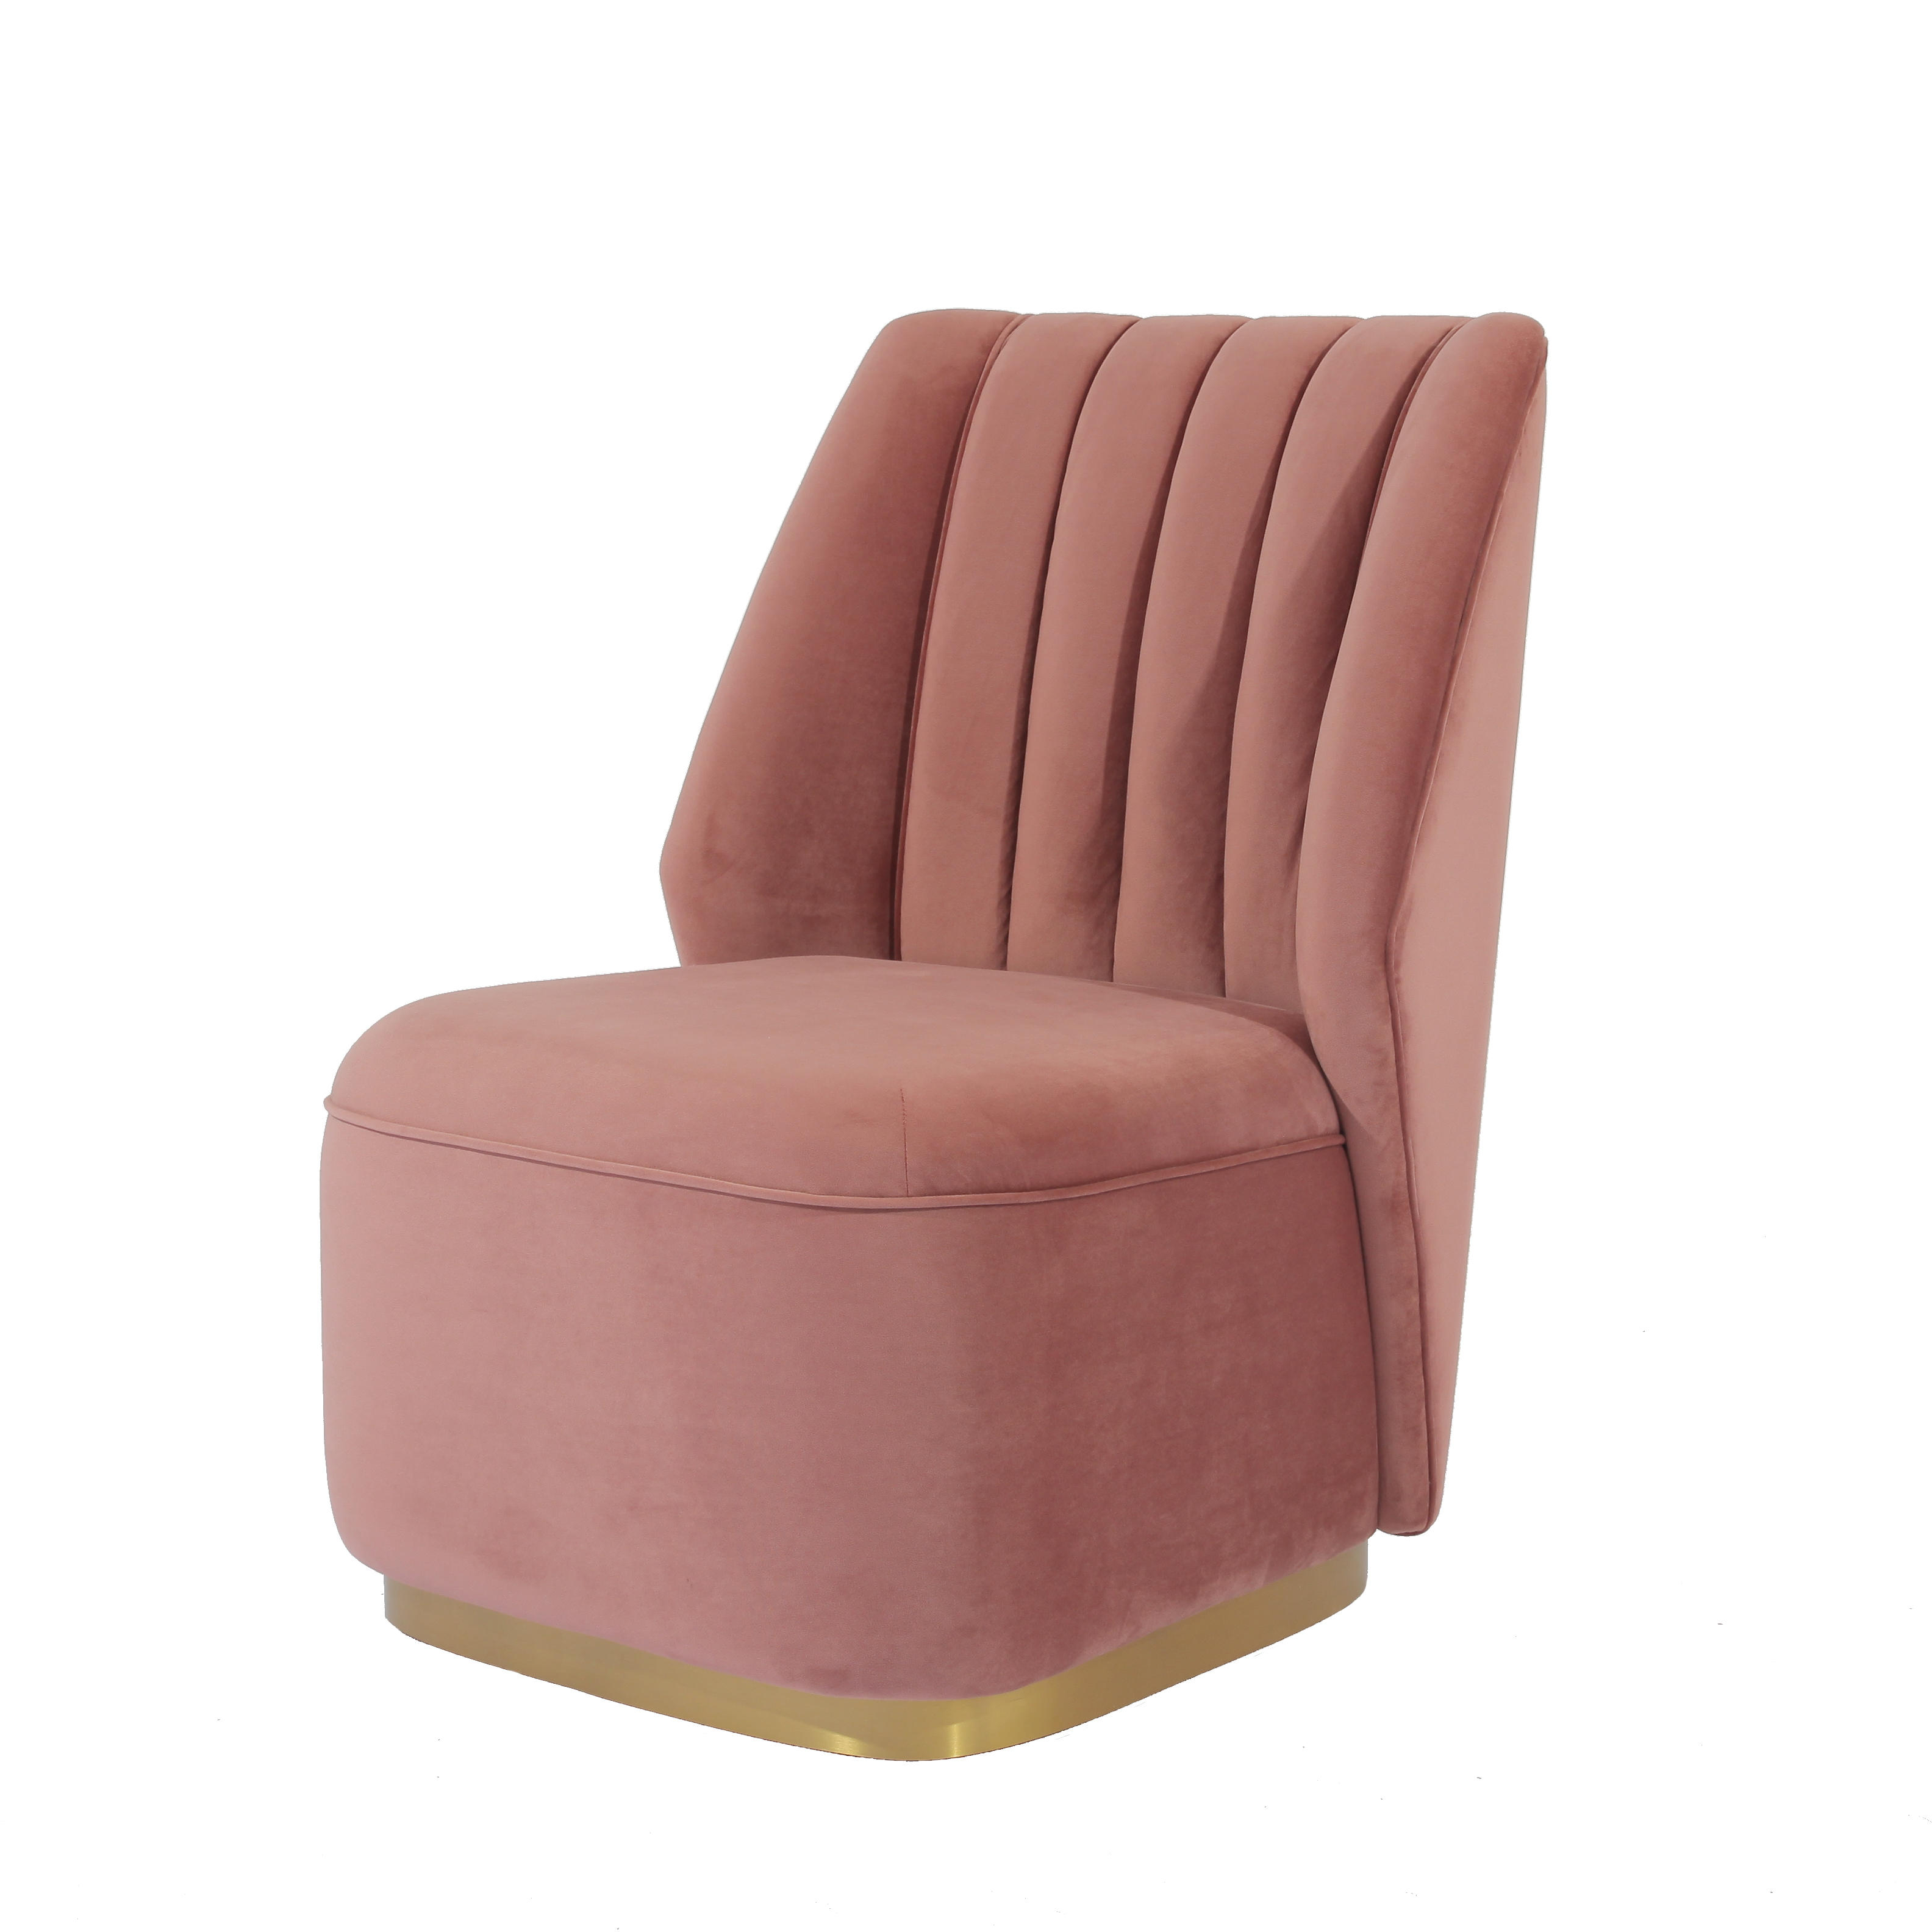 RJC-1326 Tufted Line Design Sectional Single Sofa with Pink Velvet Upholstered